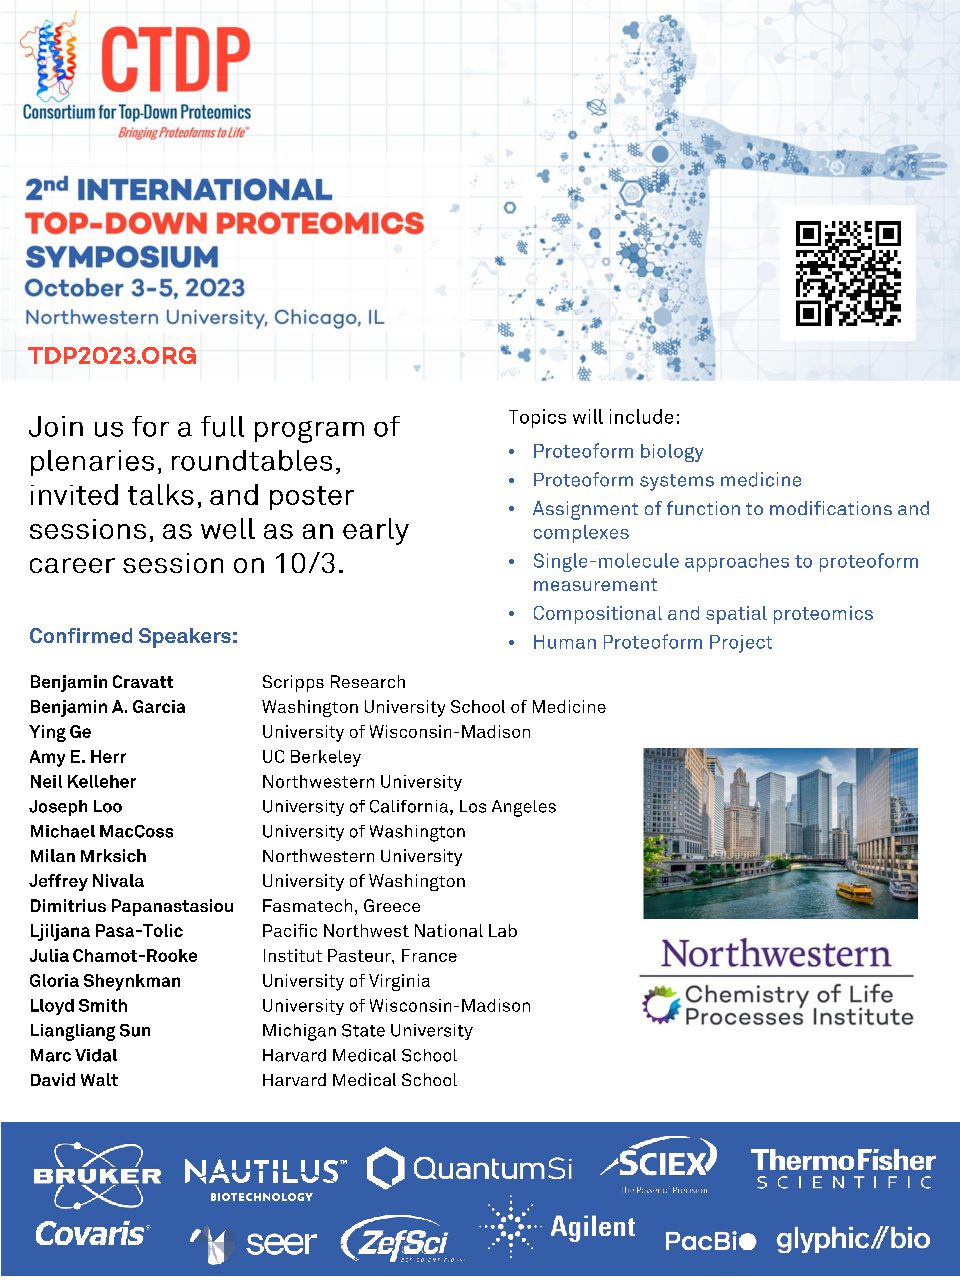 2nd International Top-Down Proteomics Symposium